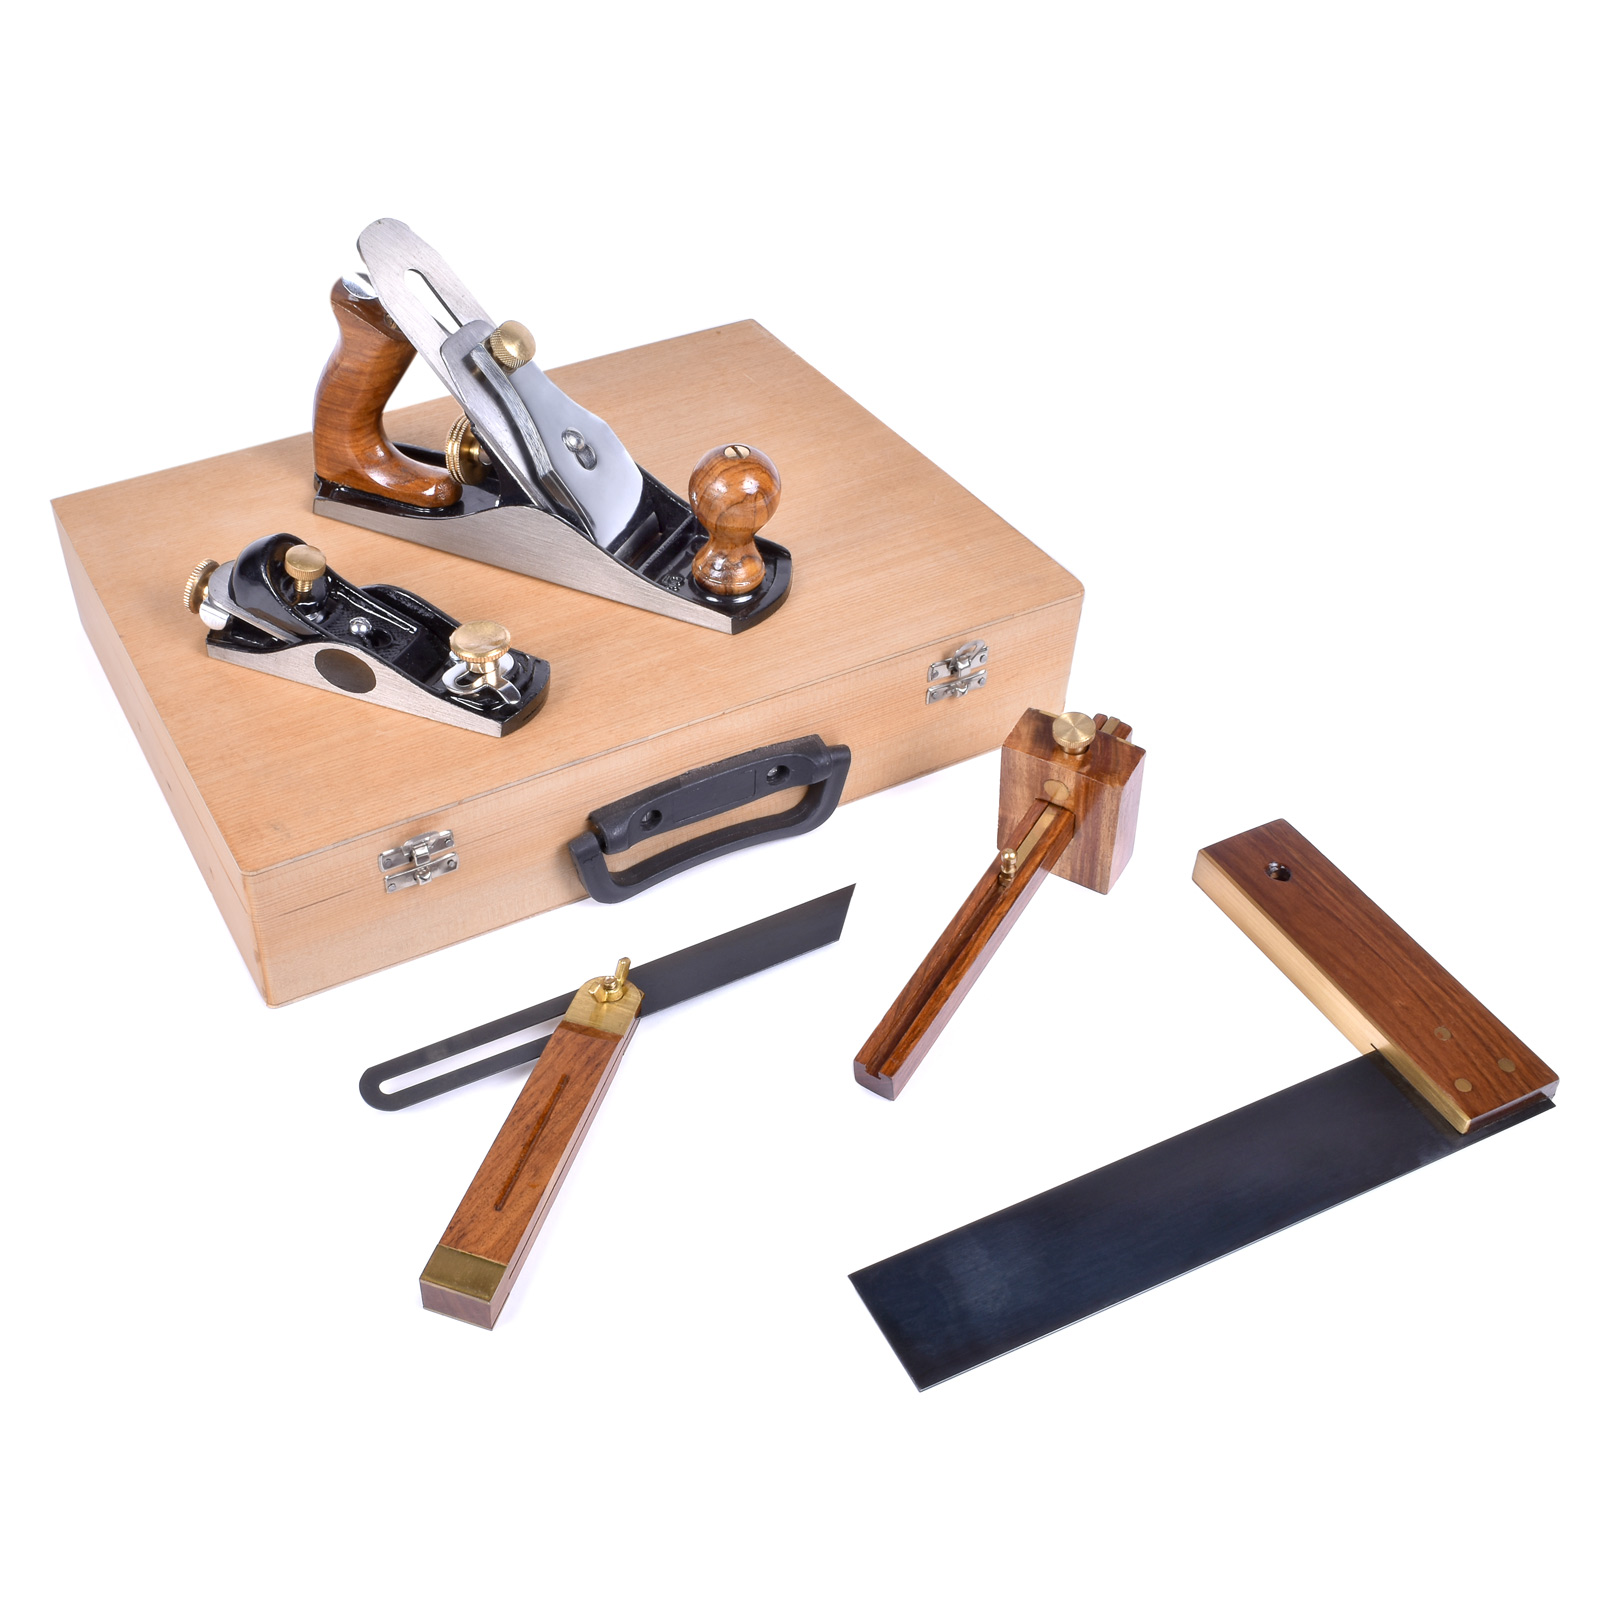 5-piece Woodworking Tool Set